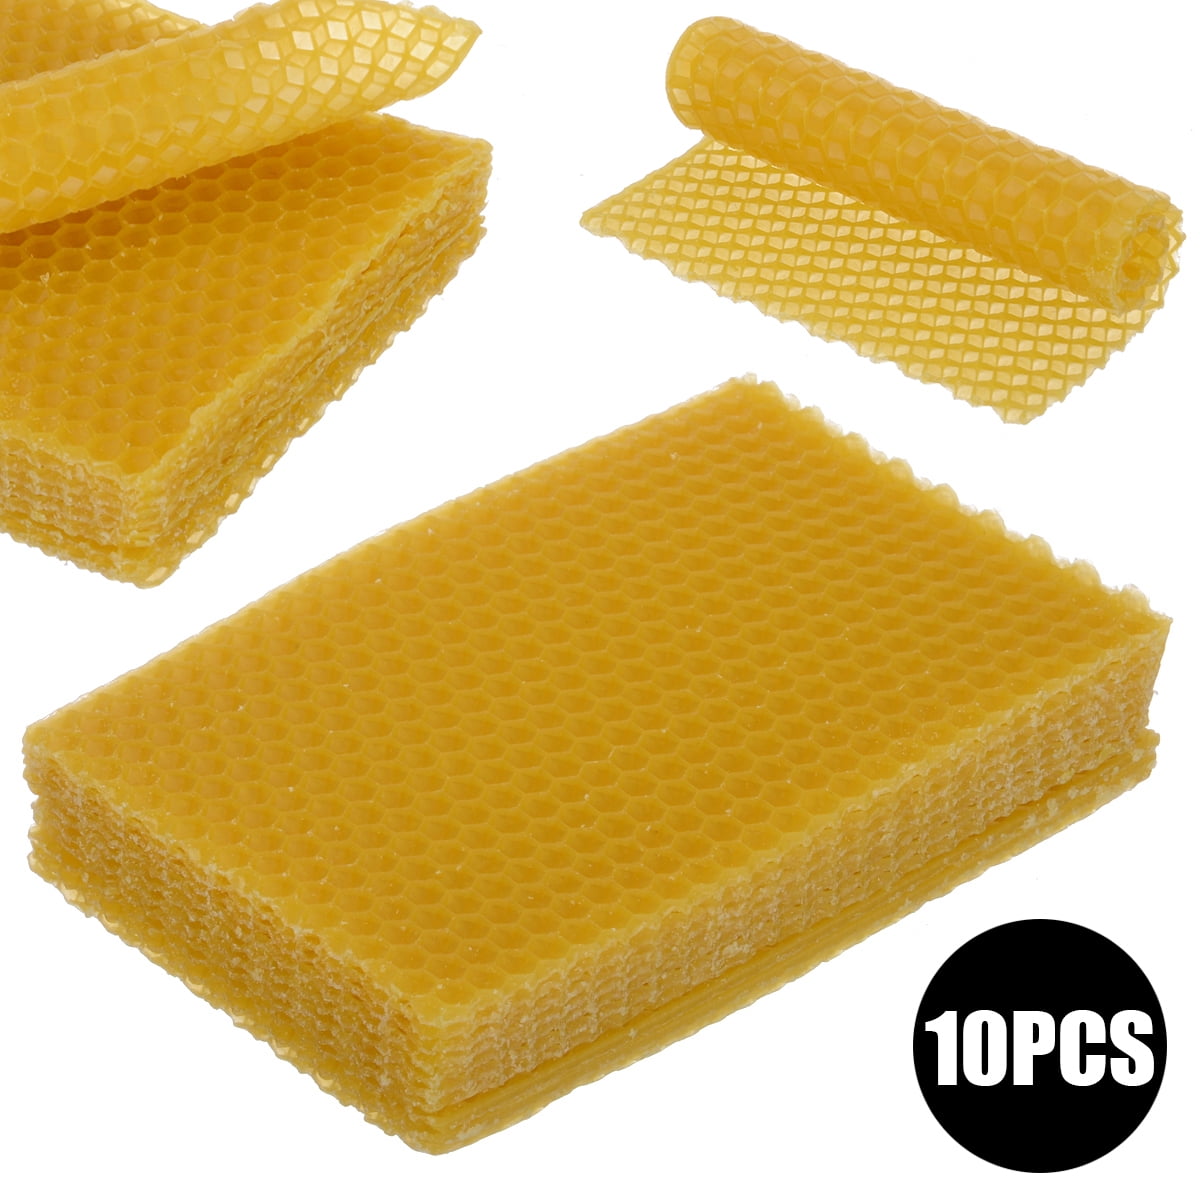 10Pcs Beekeeping Honeycomb Foundation Wax Frames Honey Hive Equipment Tool Set 